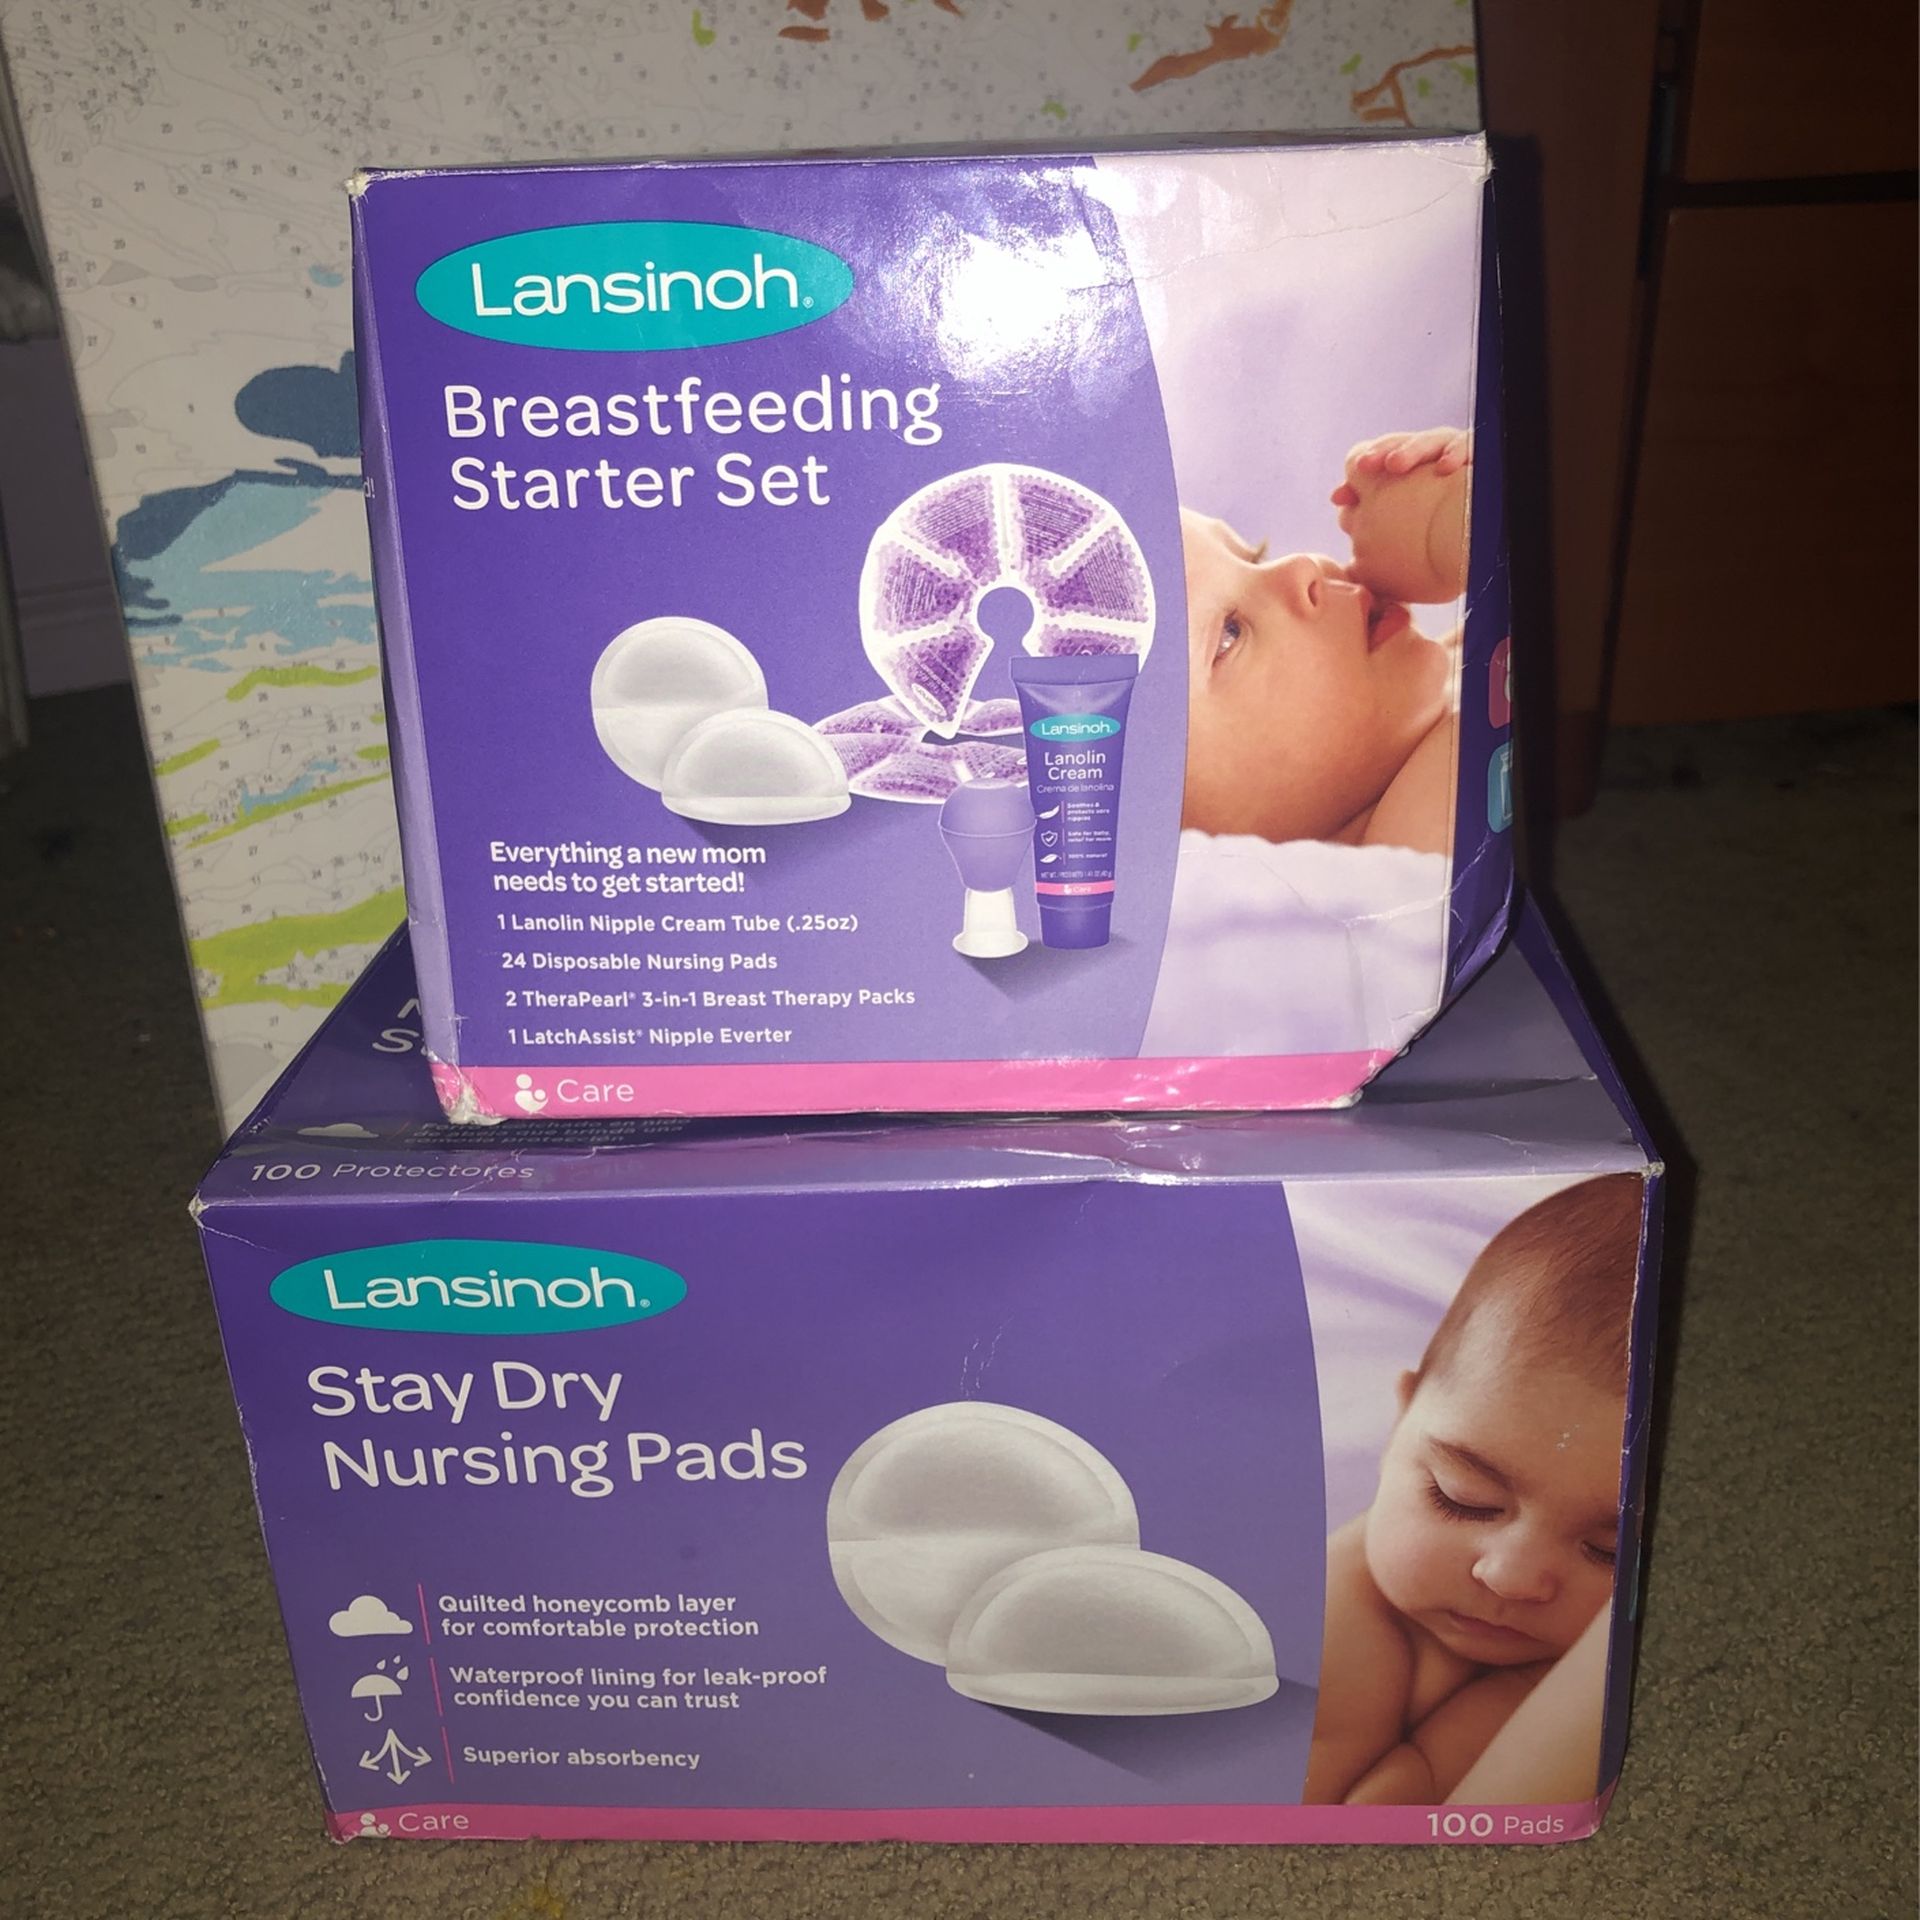 Lansinoh Breastfeeding Starter Kit